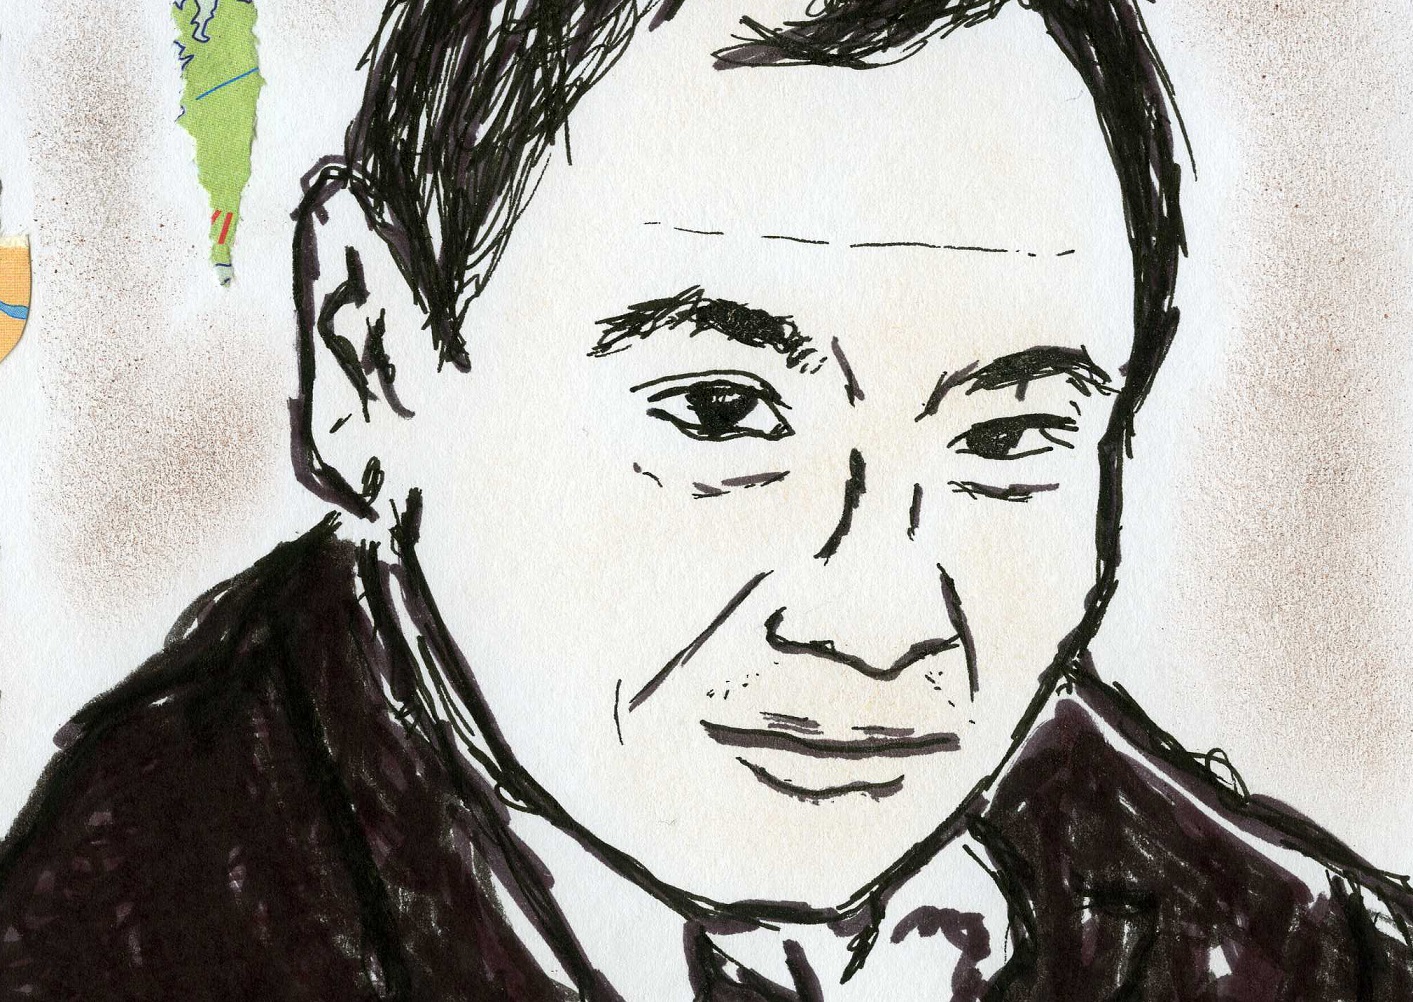 fukuyama liberalism discontents